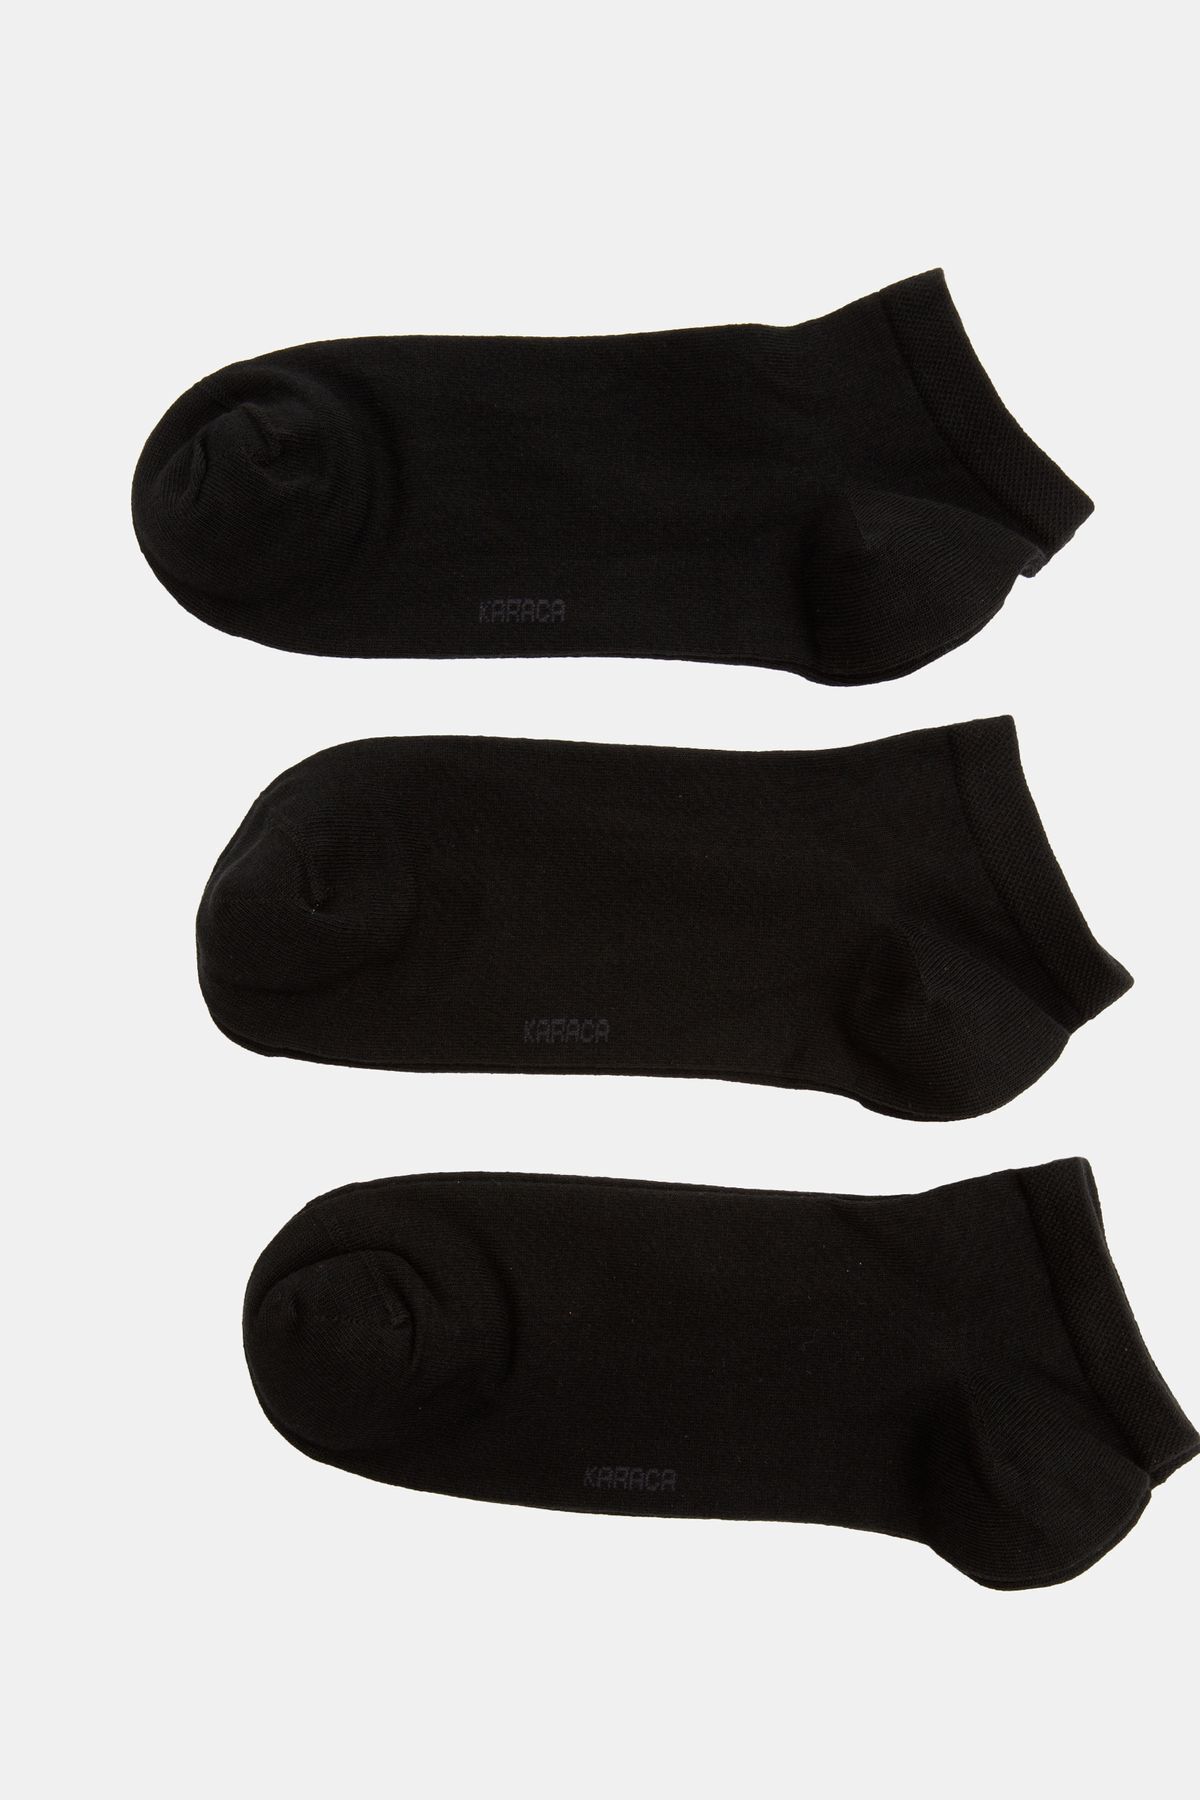 Karaca Erkek Patik Çorap-Siyah